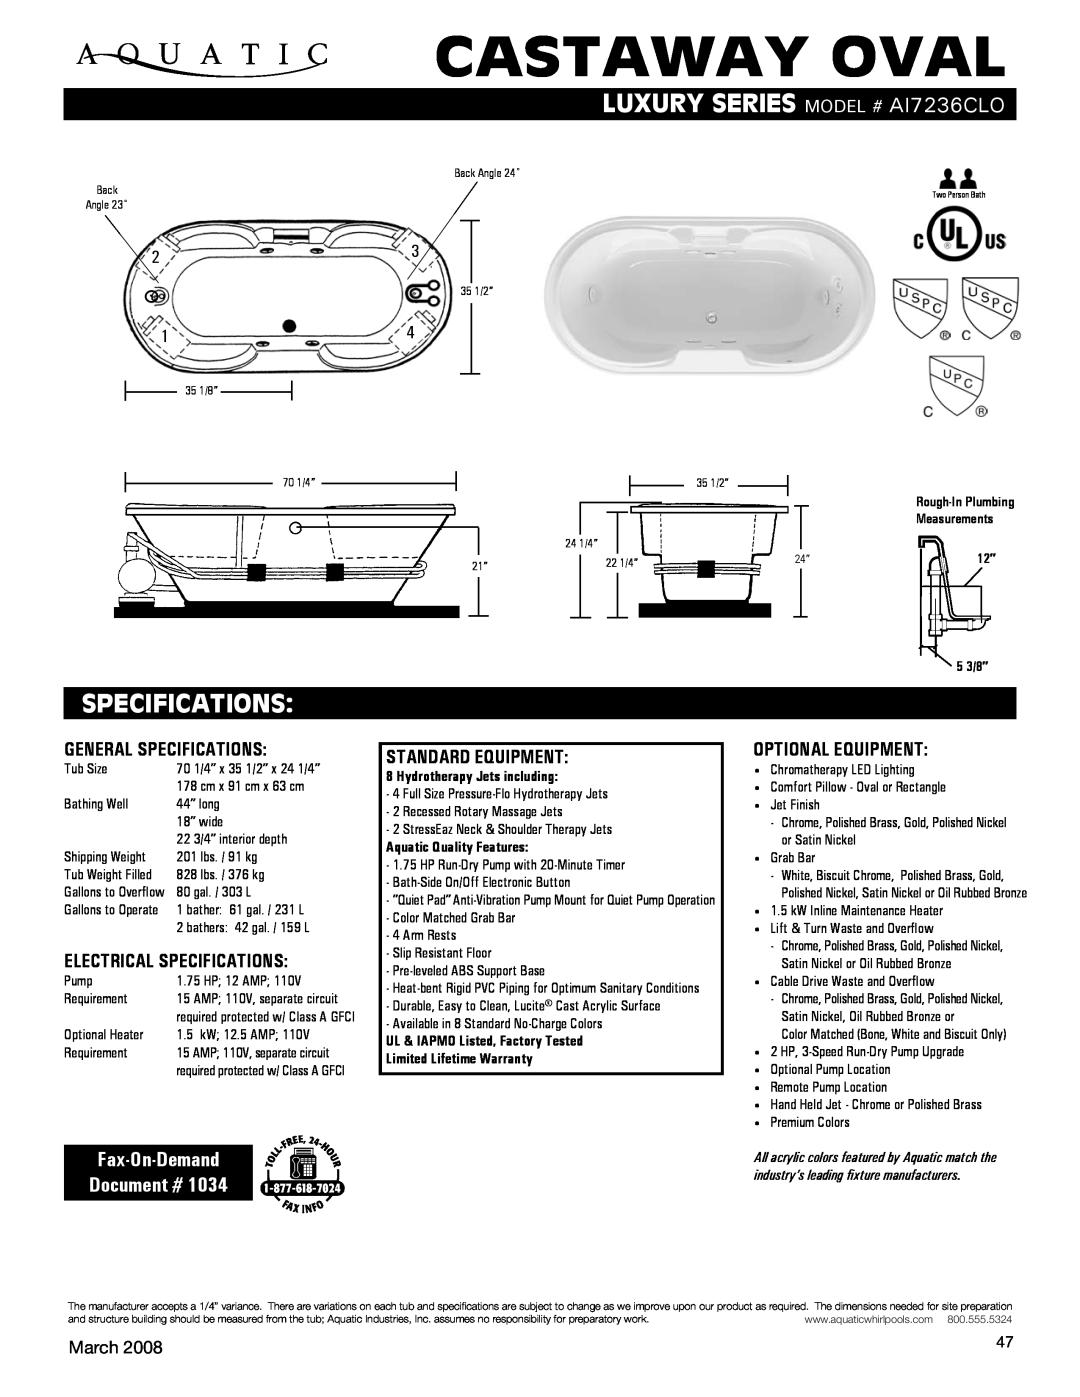 Aquatic ai7236Clo specifications Castaway oval, luxury series Model # ai7236CLO, Specifications, Fax-On-Demand Document # 